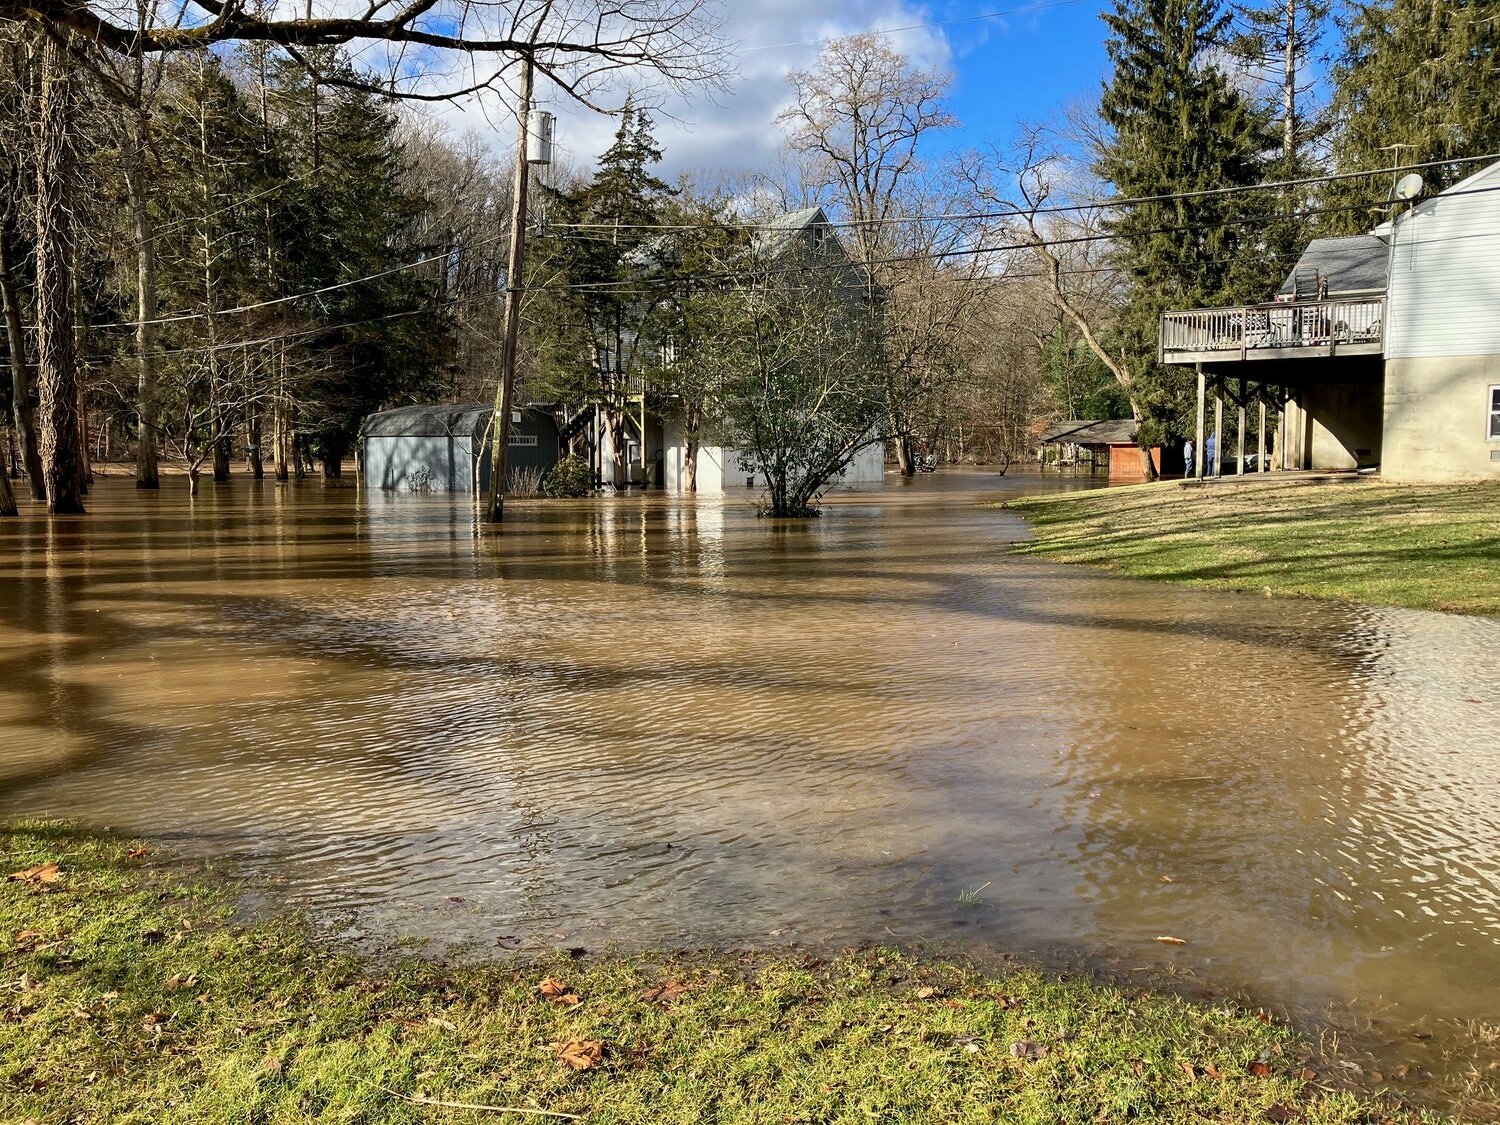 Two men survey the flooding on Mistletoe Drive Wednesday near the Neshaminy Creek.